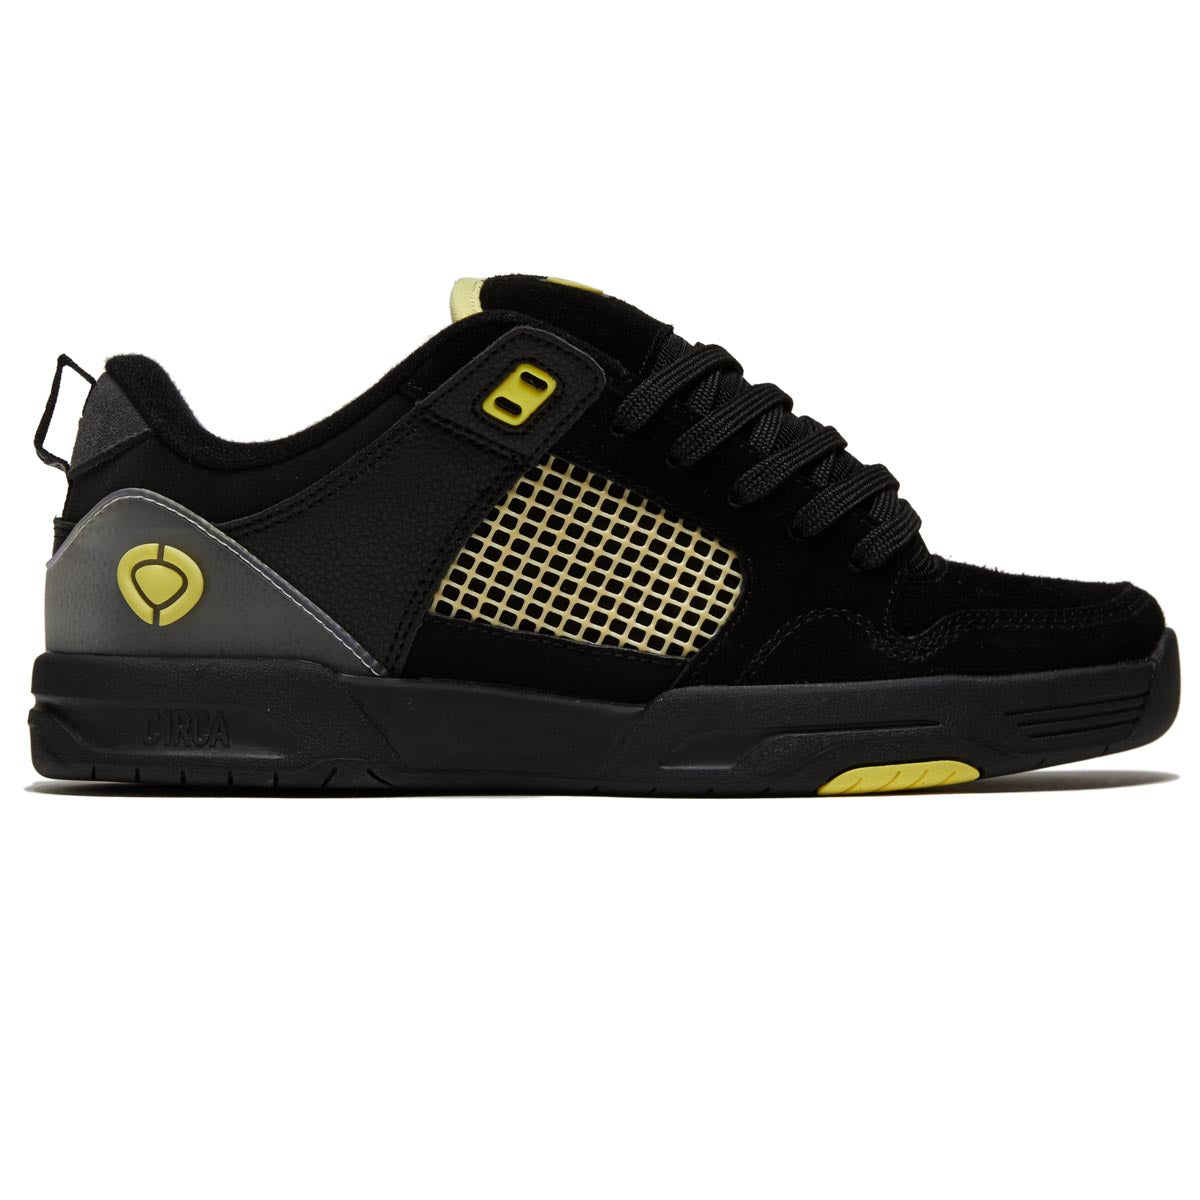 C1rca Tave TT Shoes - Black/Yellow image 1